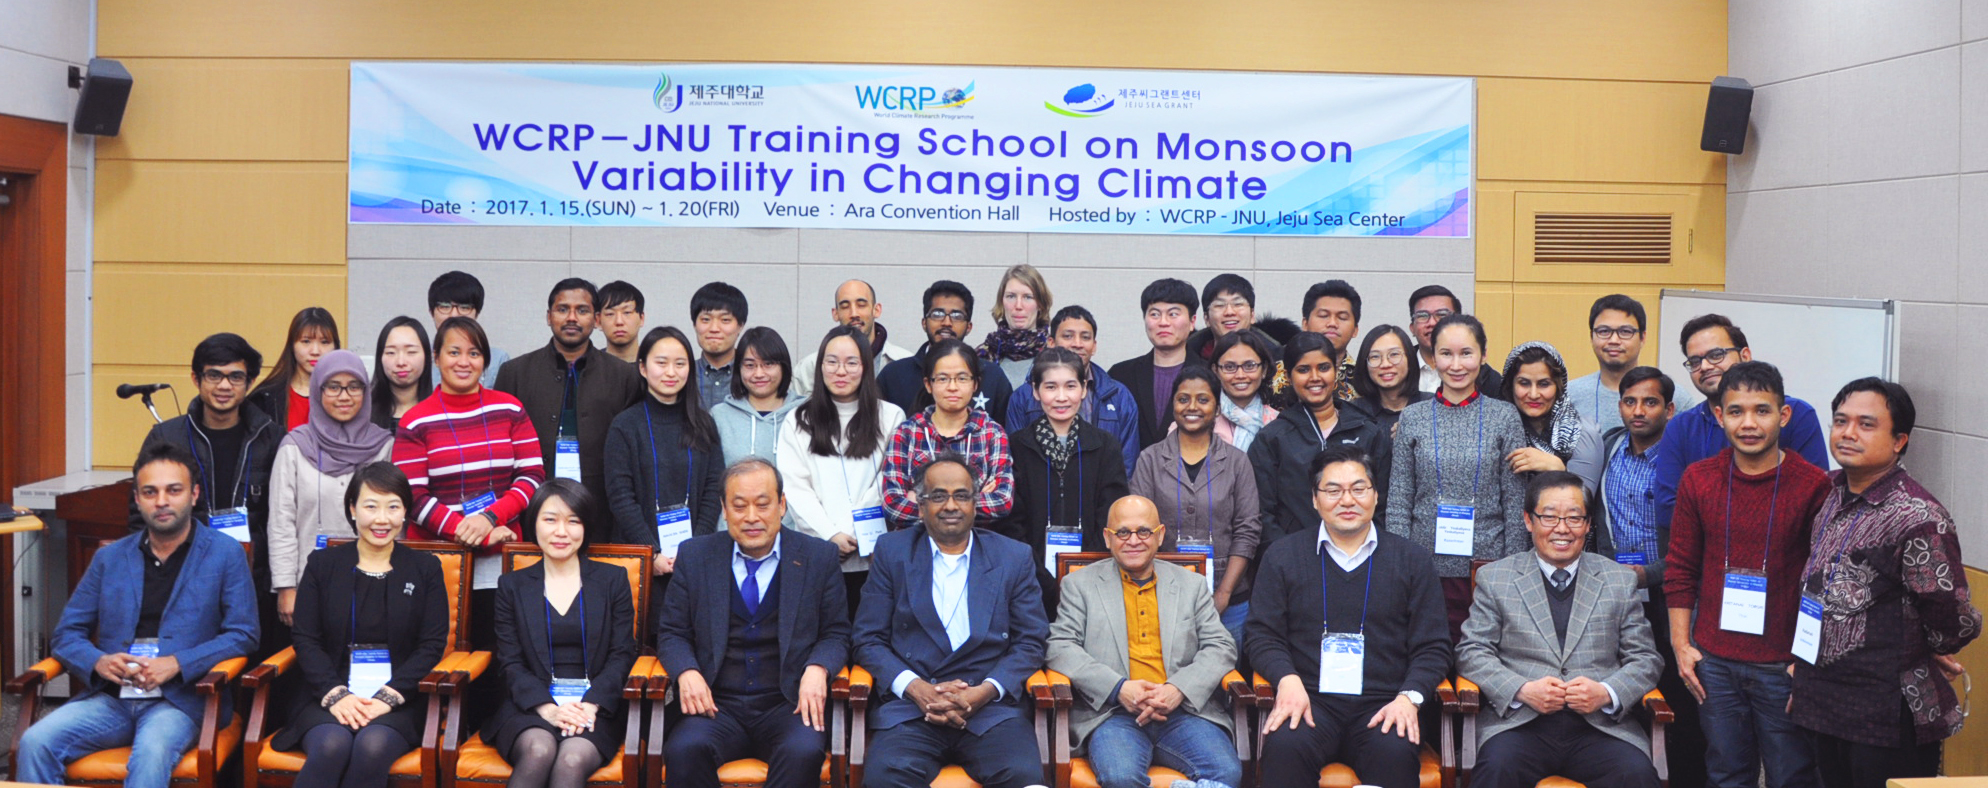 WCRP-JNU Training School Group Photo